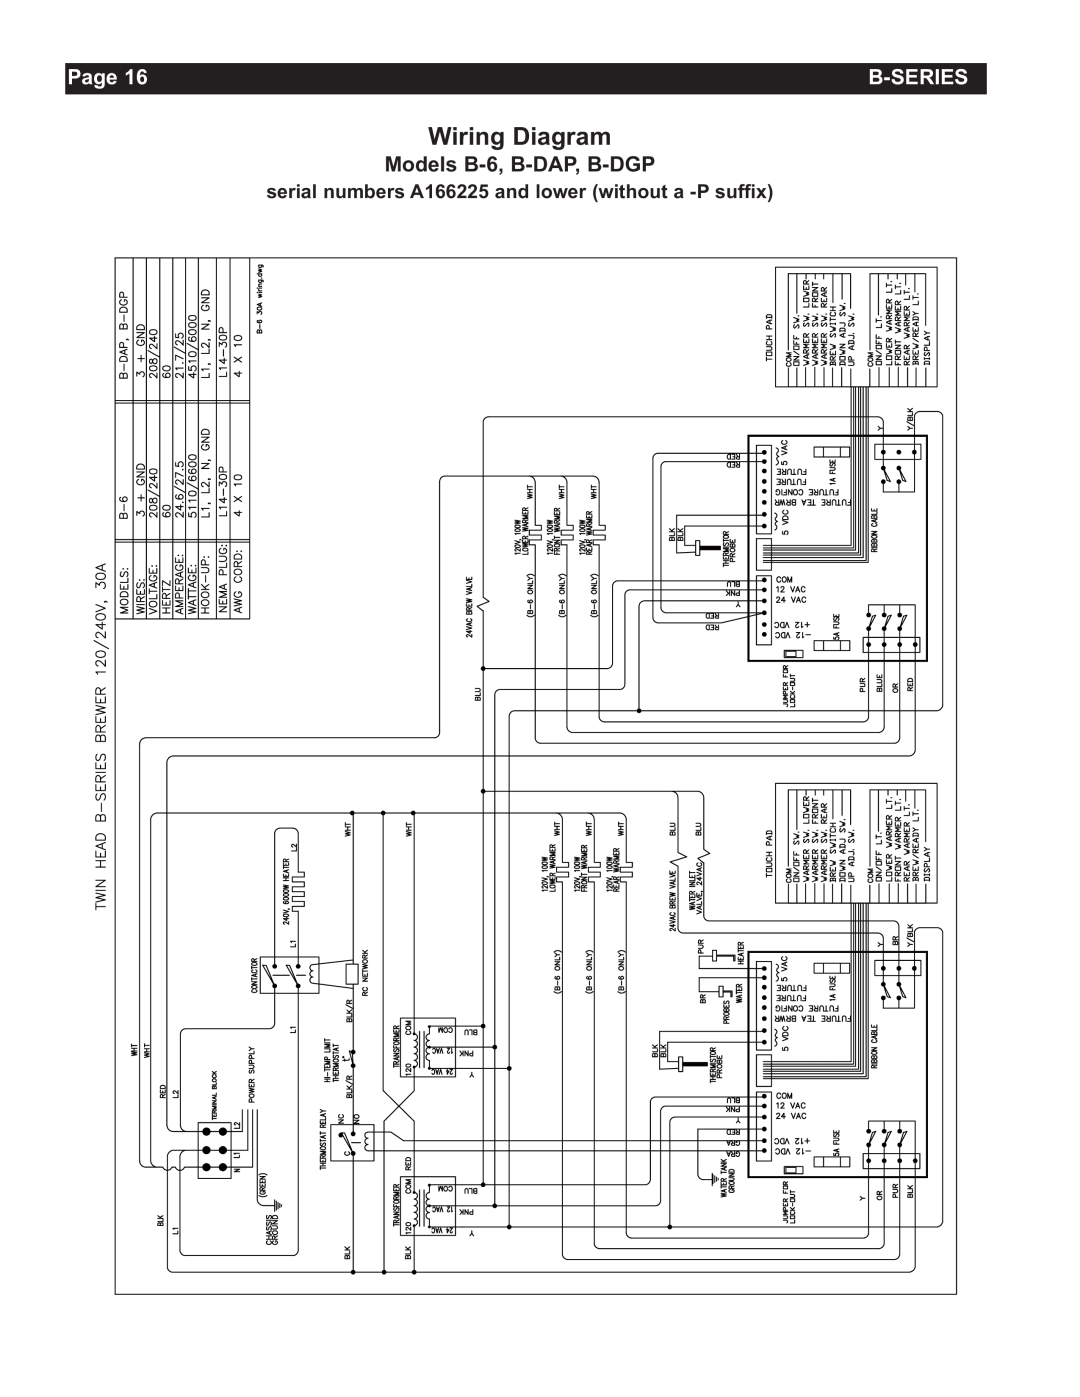 Grindmaster AMW B-Series manual Models B-6, B-DAP, B-DGP, Wiring Diagram, Page 